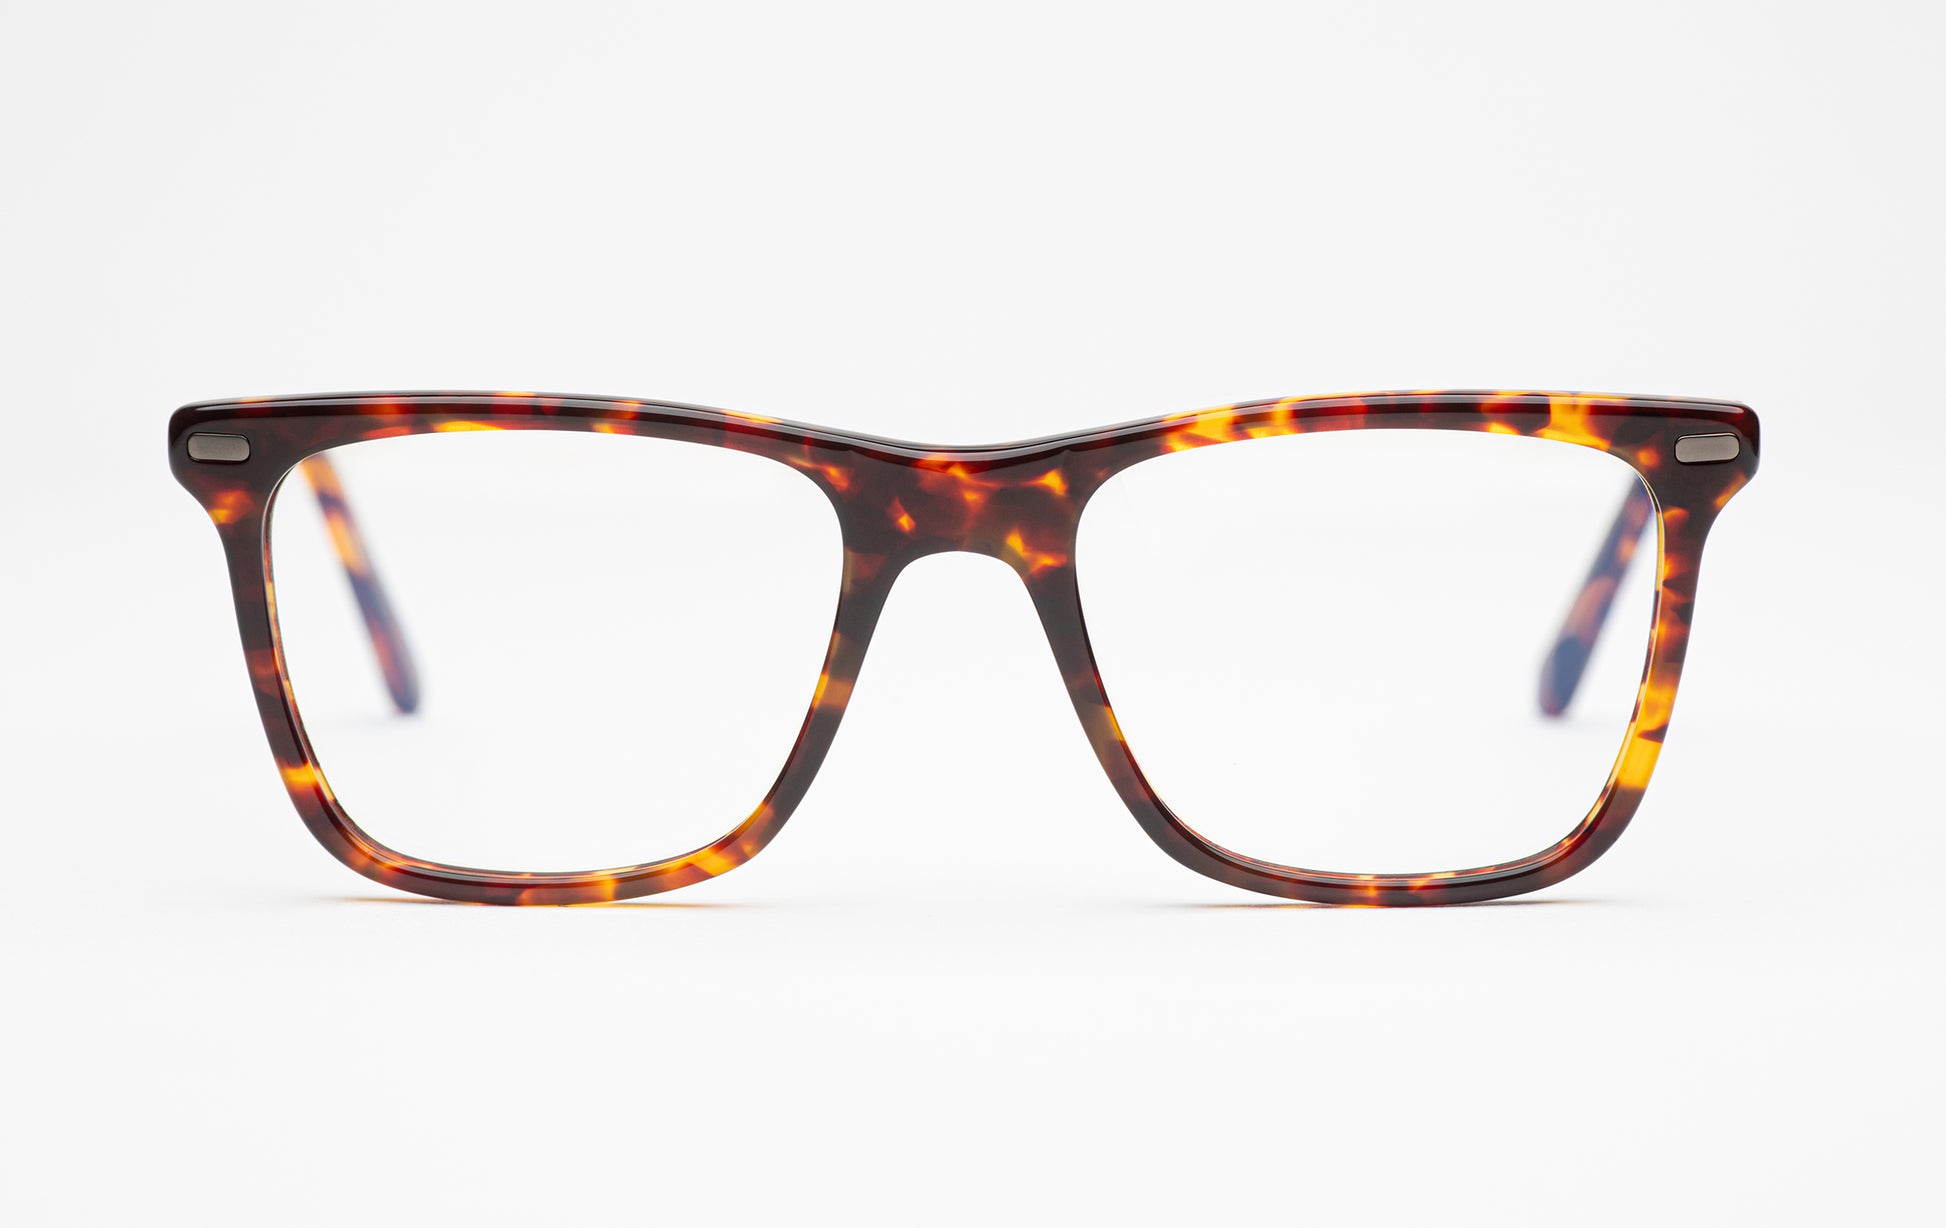 The Navigator | Acetate Square Frame Glasses - Designer Prescription – Tortoiseshell